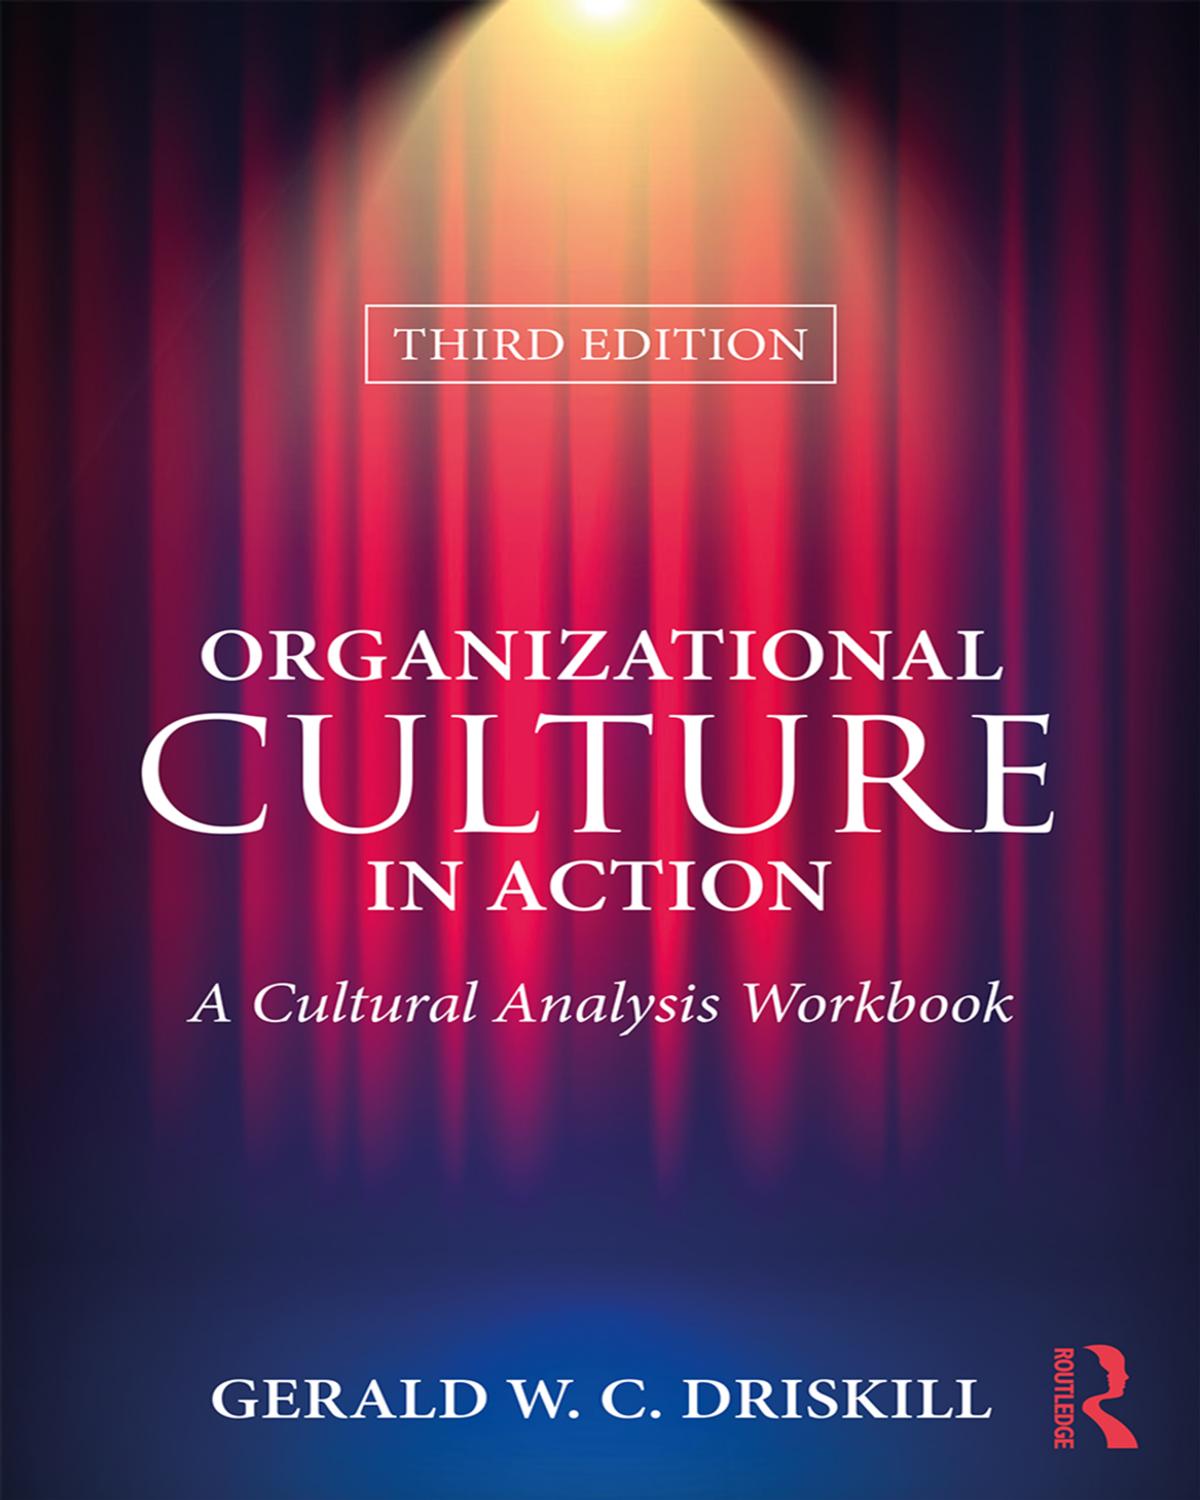 Organizational Culture in Action - Gerald W. C. Driskill.jpg